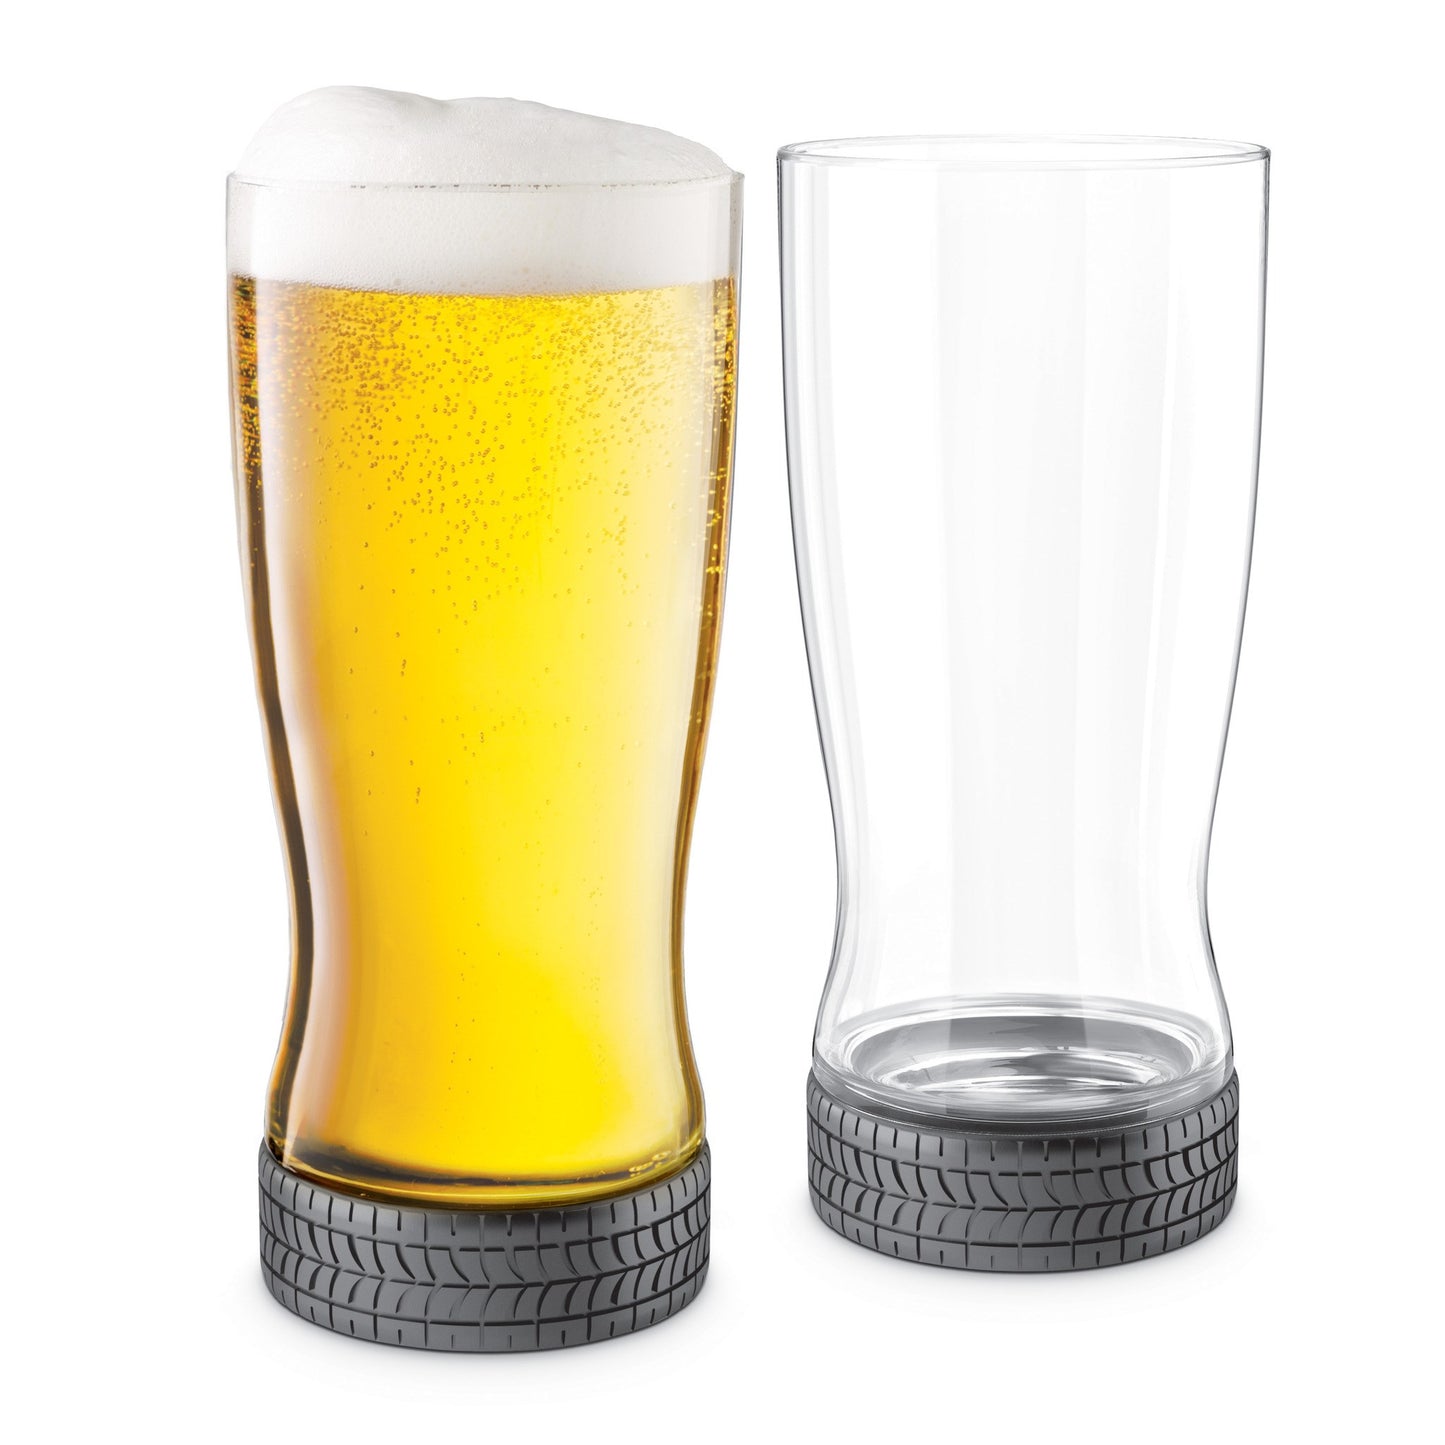 Wheel and Rim Beer Glasses - Set of 2